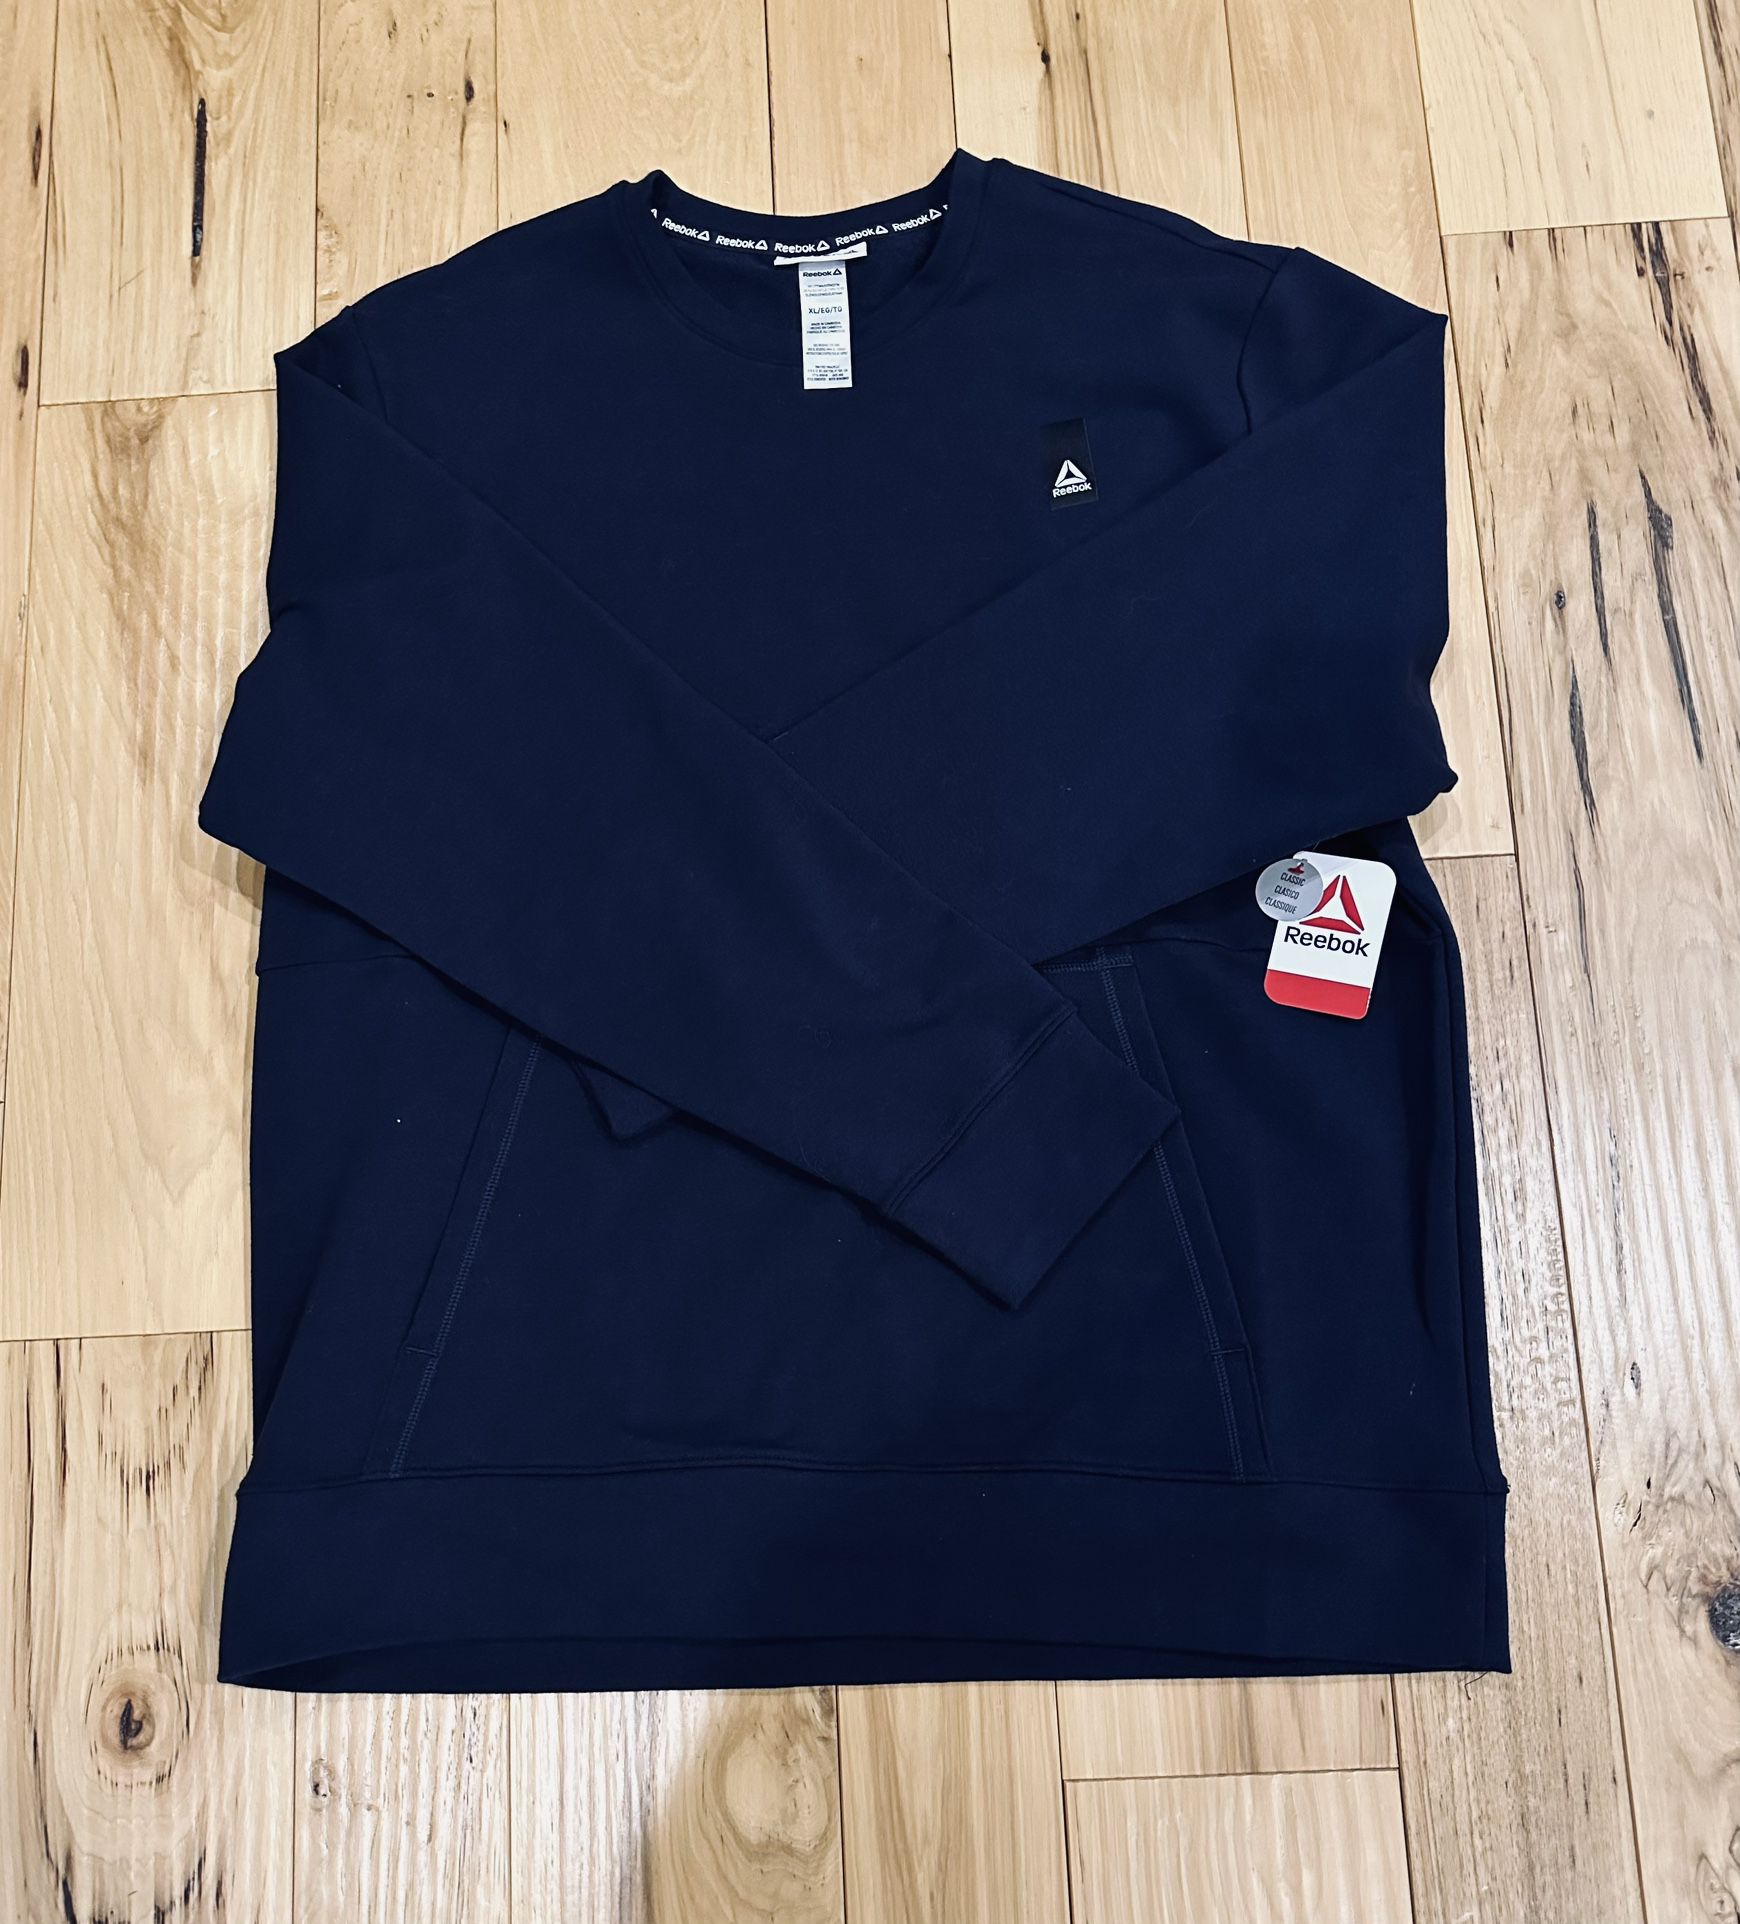 NEW! Reebok Men’s Navy Blue Fundamental Comfort Crew Neck Sweatshirt. Size XL.